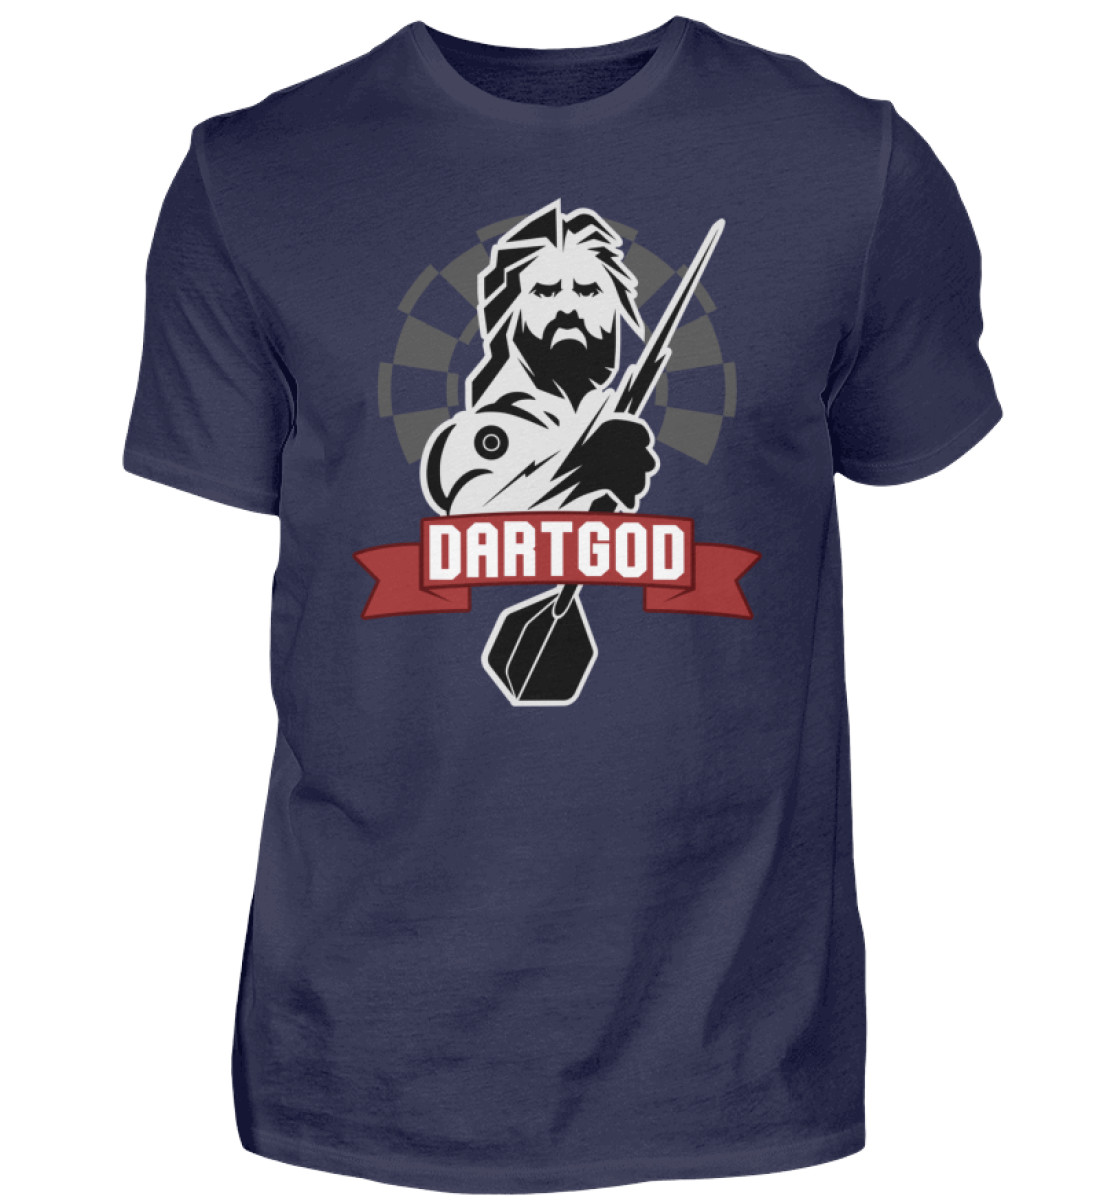 DartGod - Herren Shirt-198